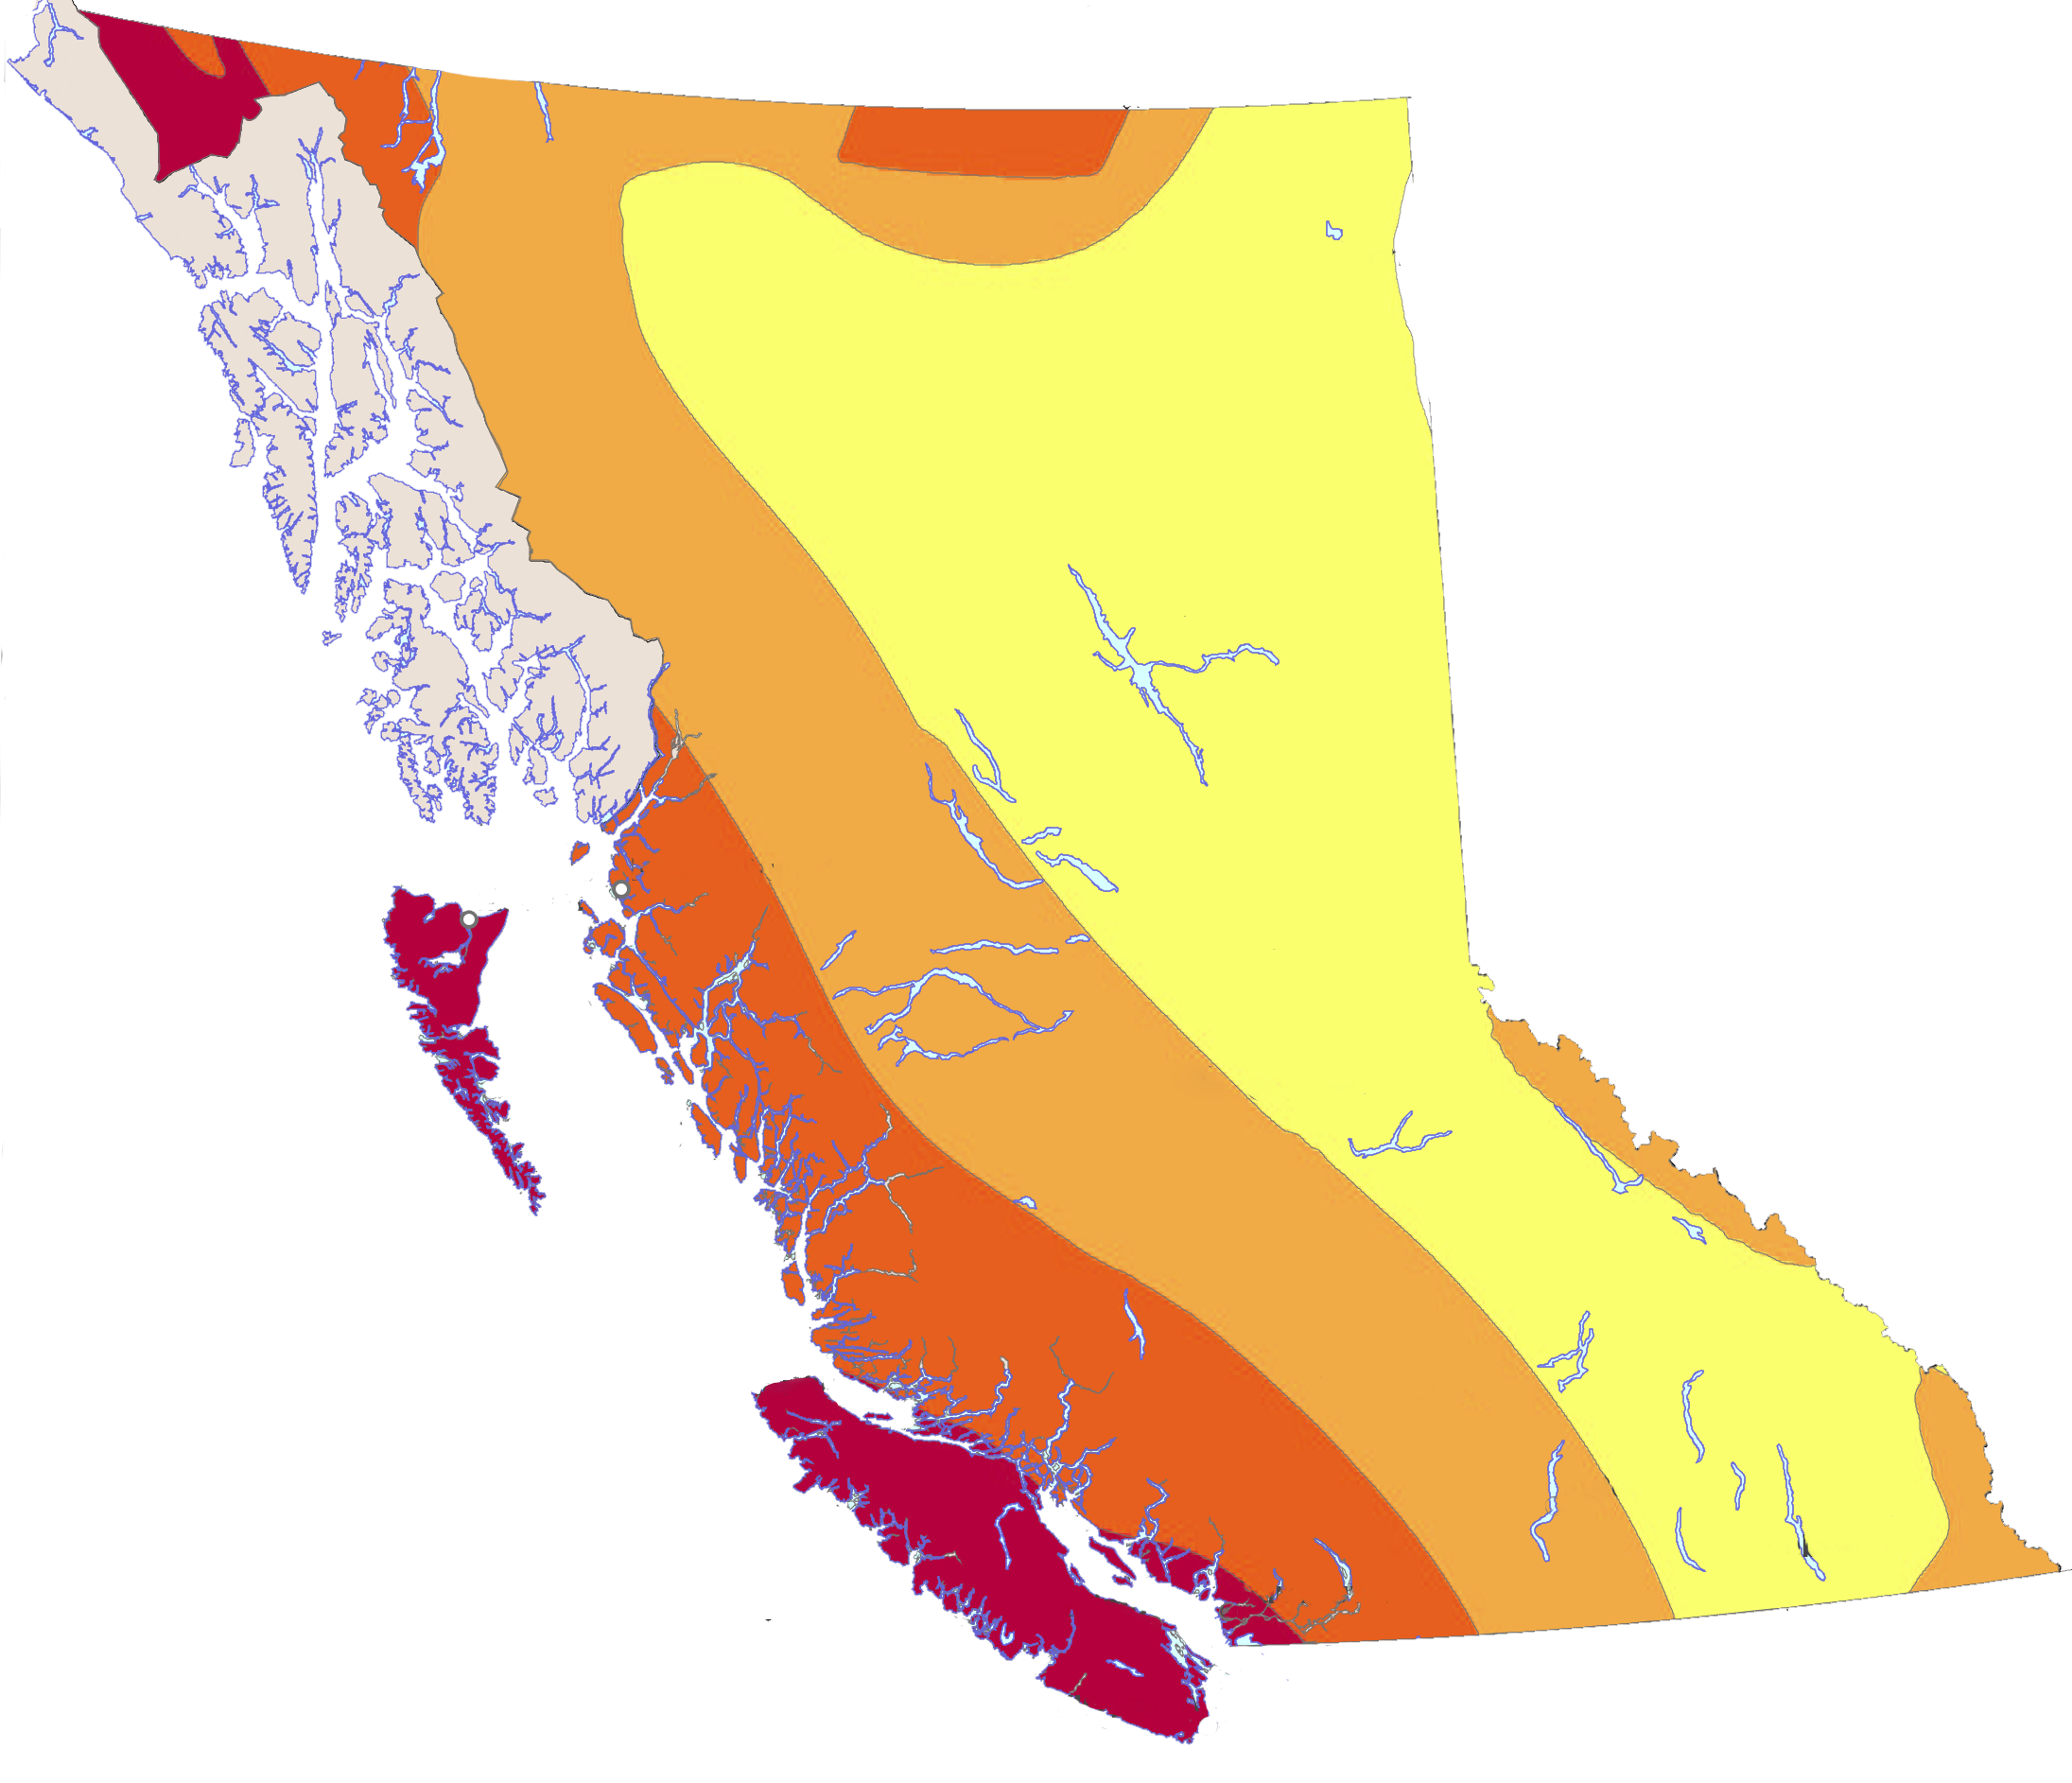 BC seismic risk map